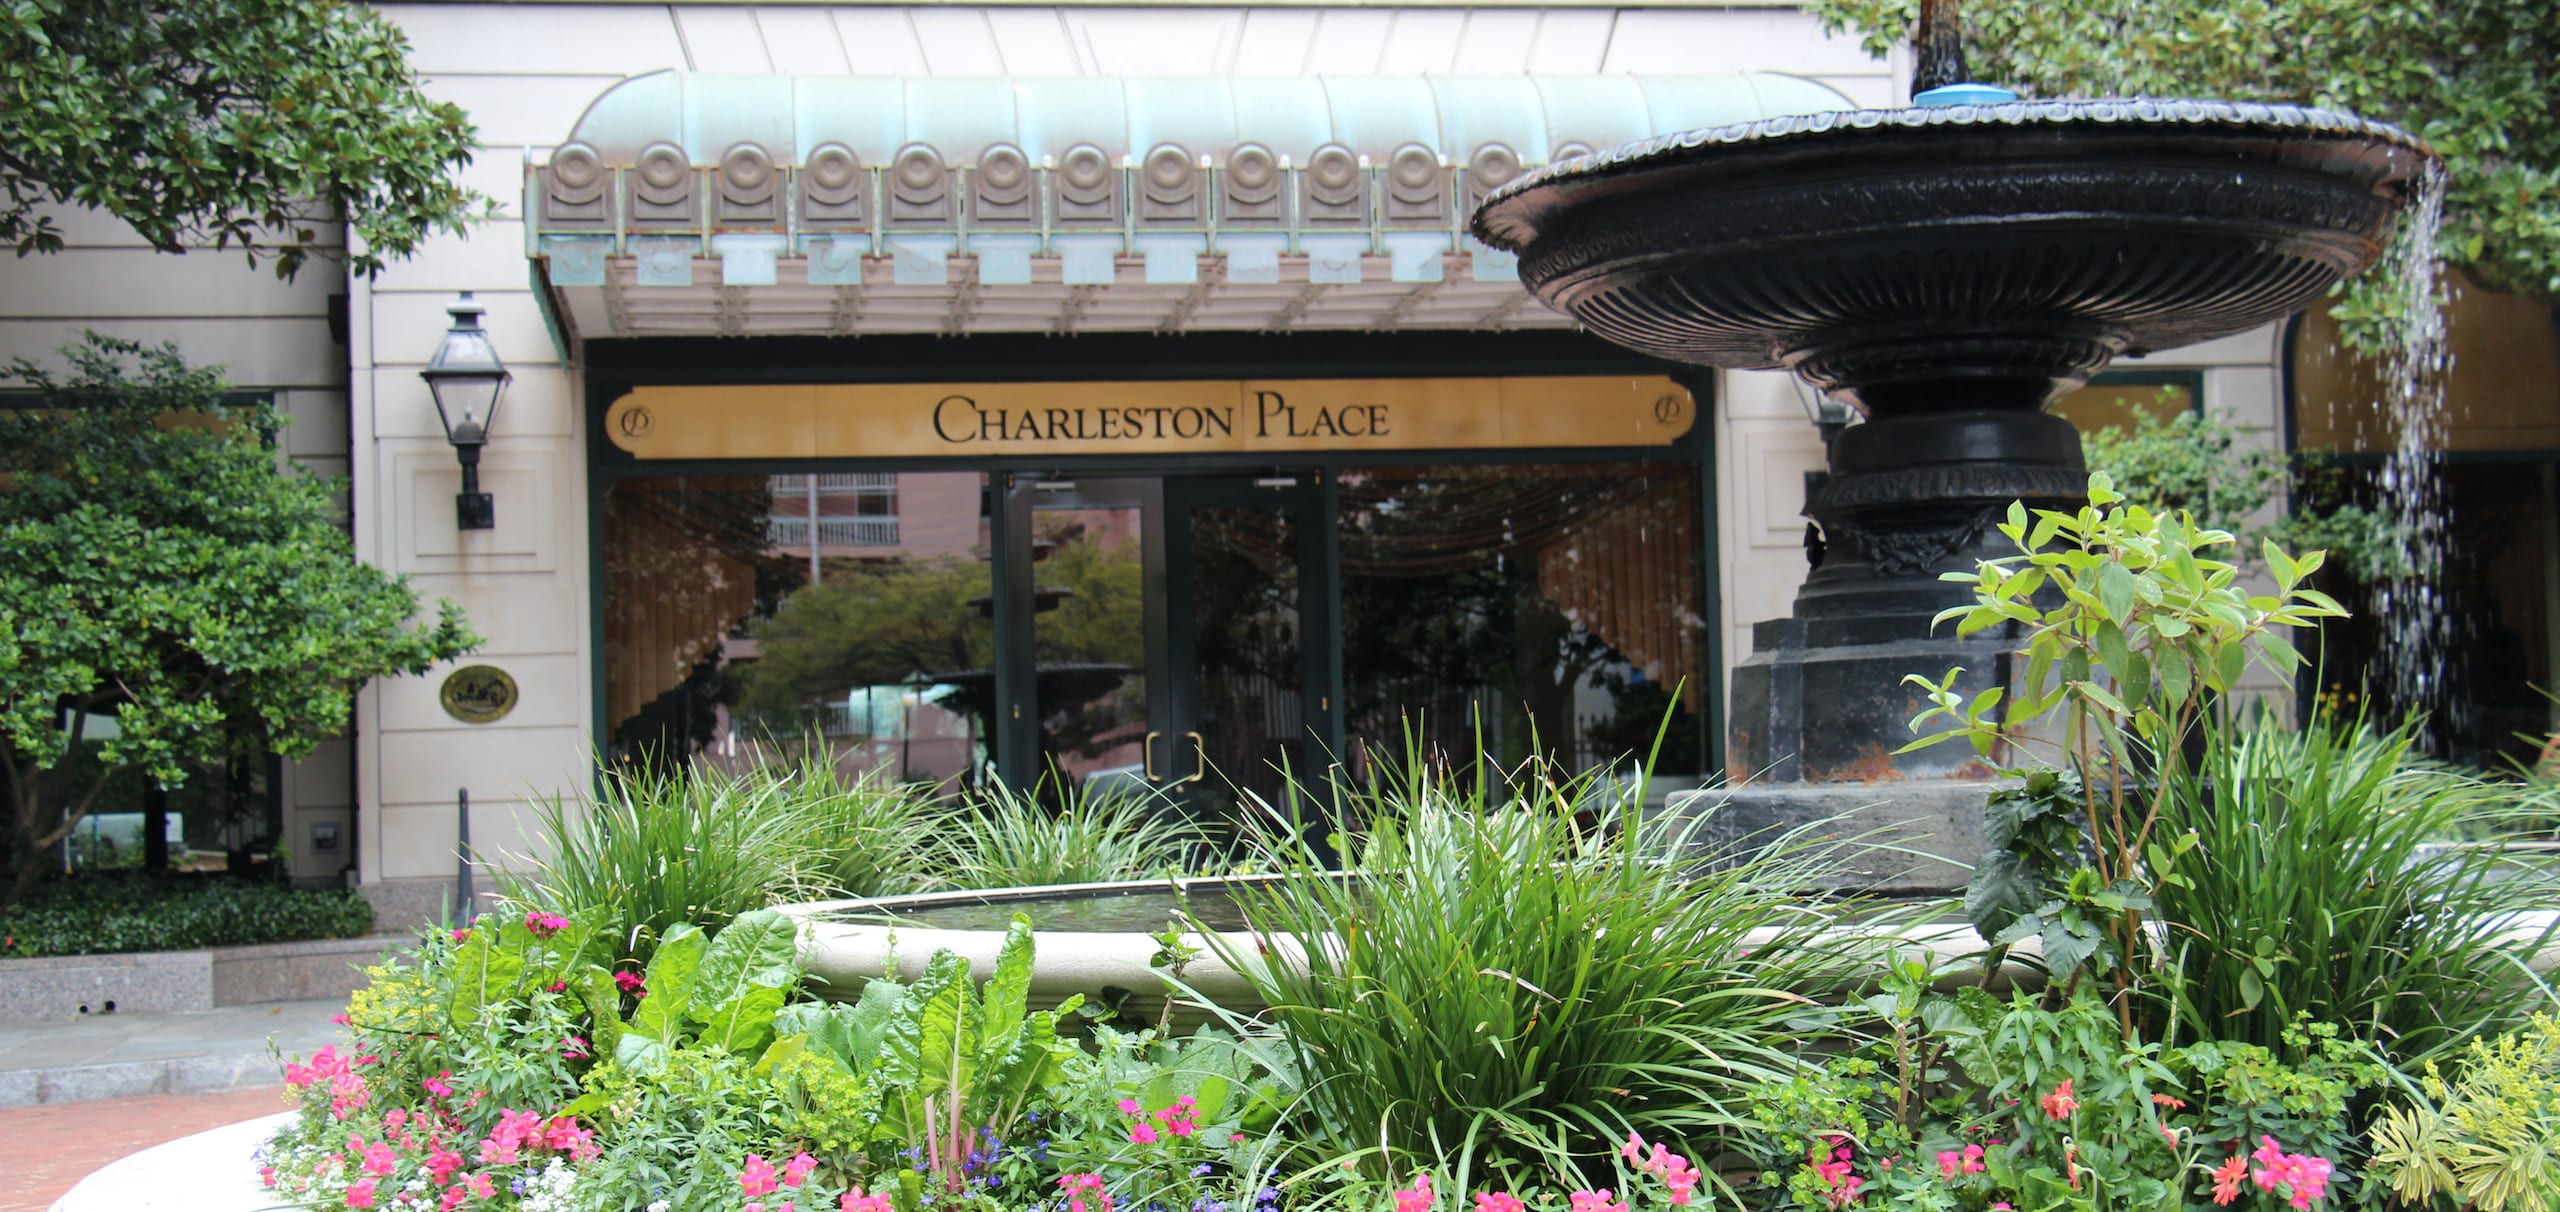 The Charleston Place - Hotel in Charleston, SC